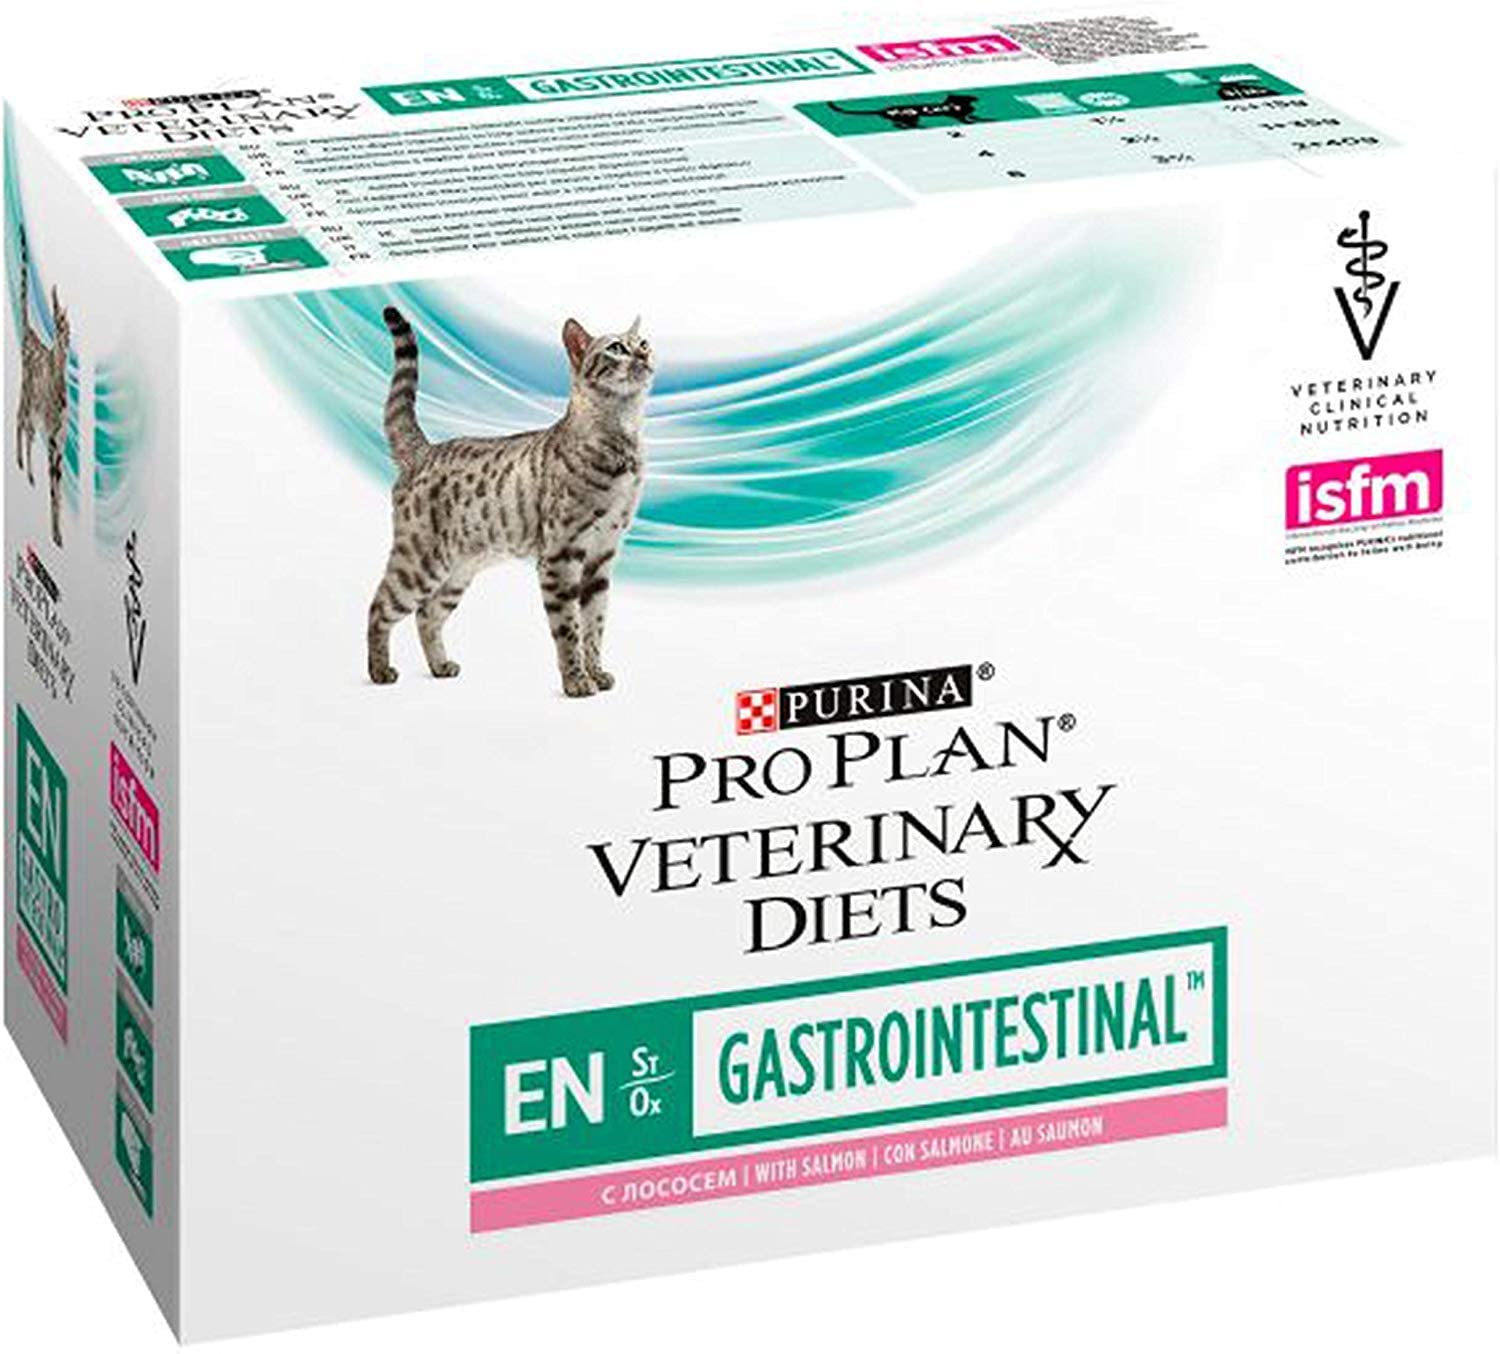  Purina ProPlan Veterinary Diets en – gastrointestinal gato Salmón 10 x 85gr 